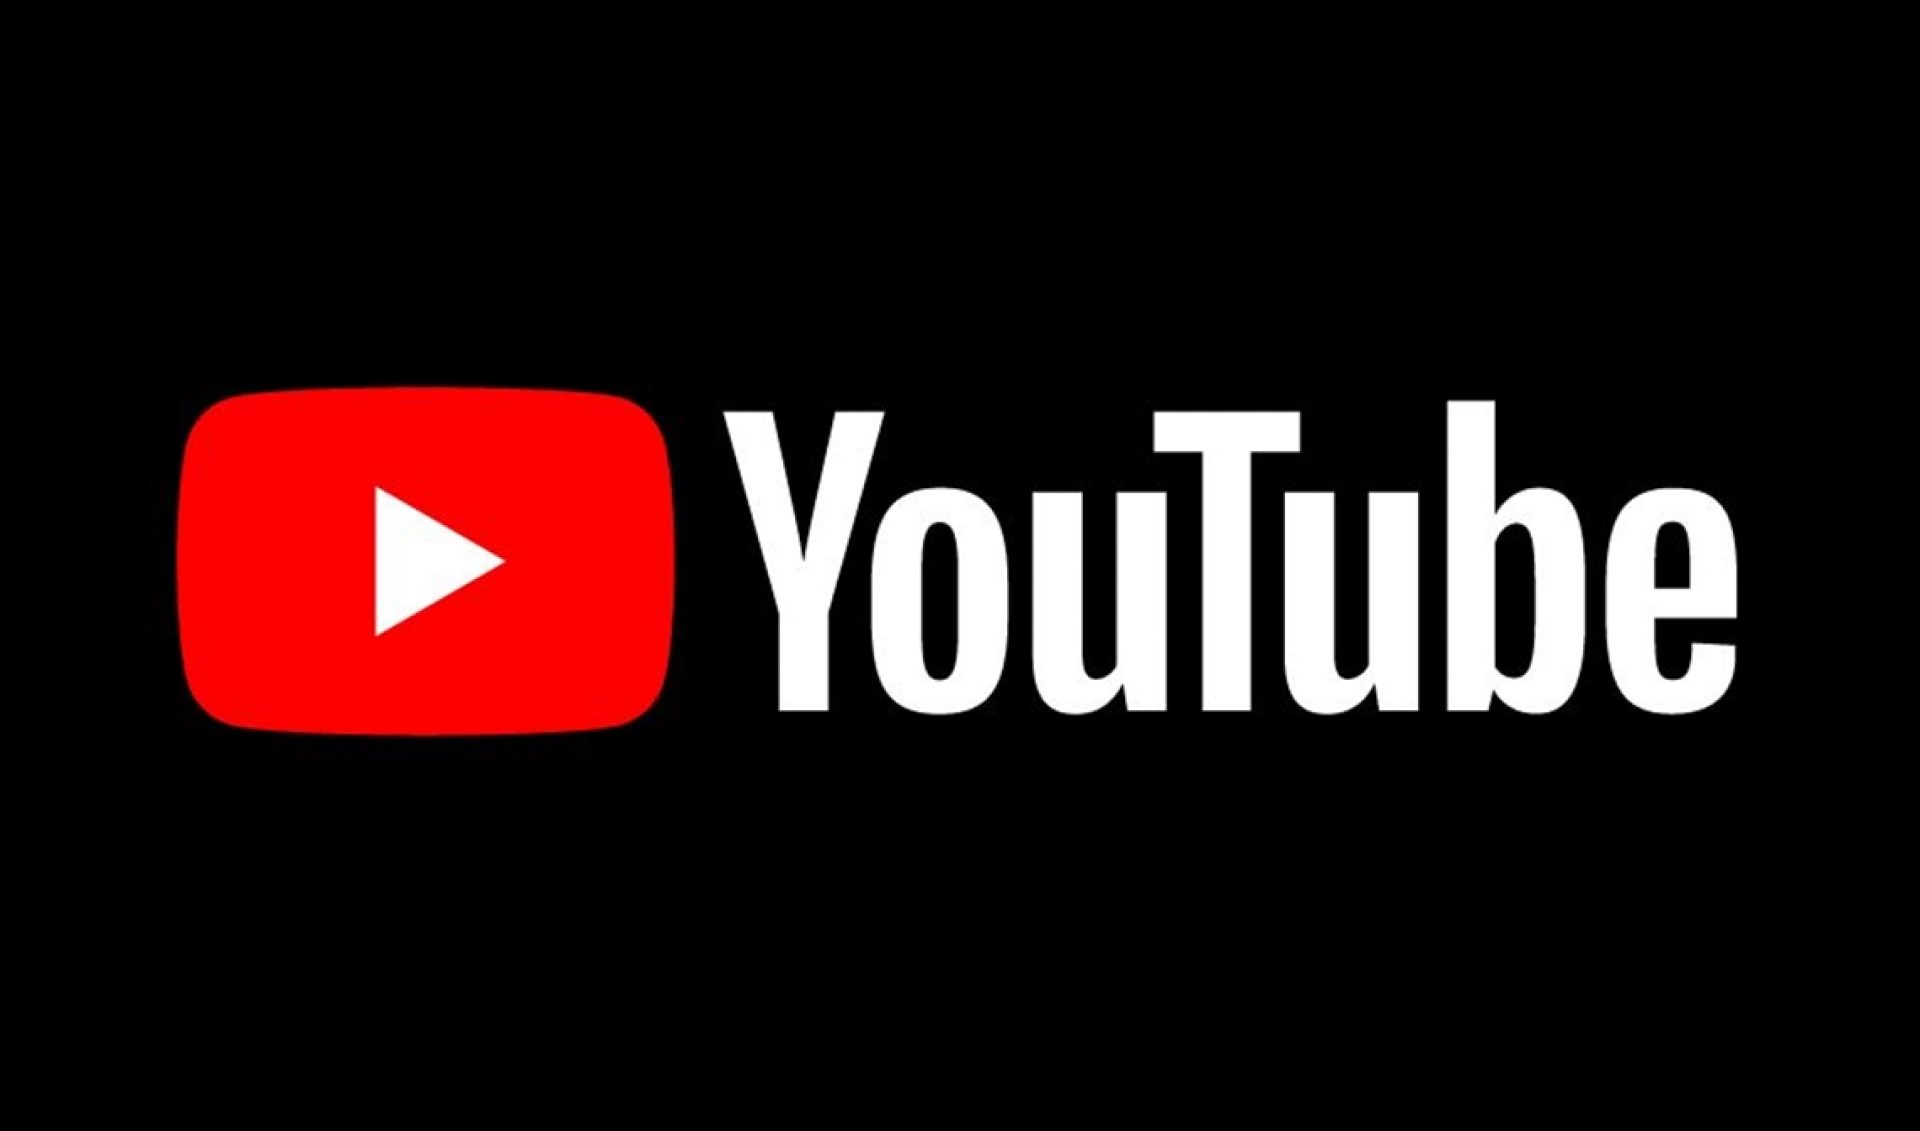 YouTube Names Ad Exec Tom Blessington VP Of Brand, Media, And Experiences